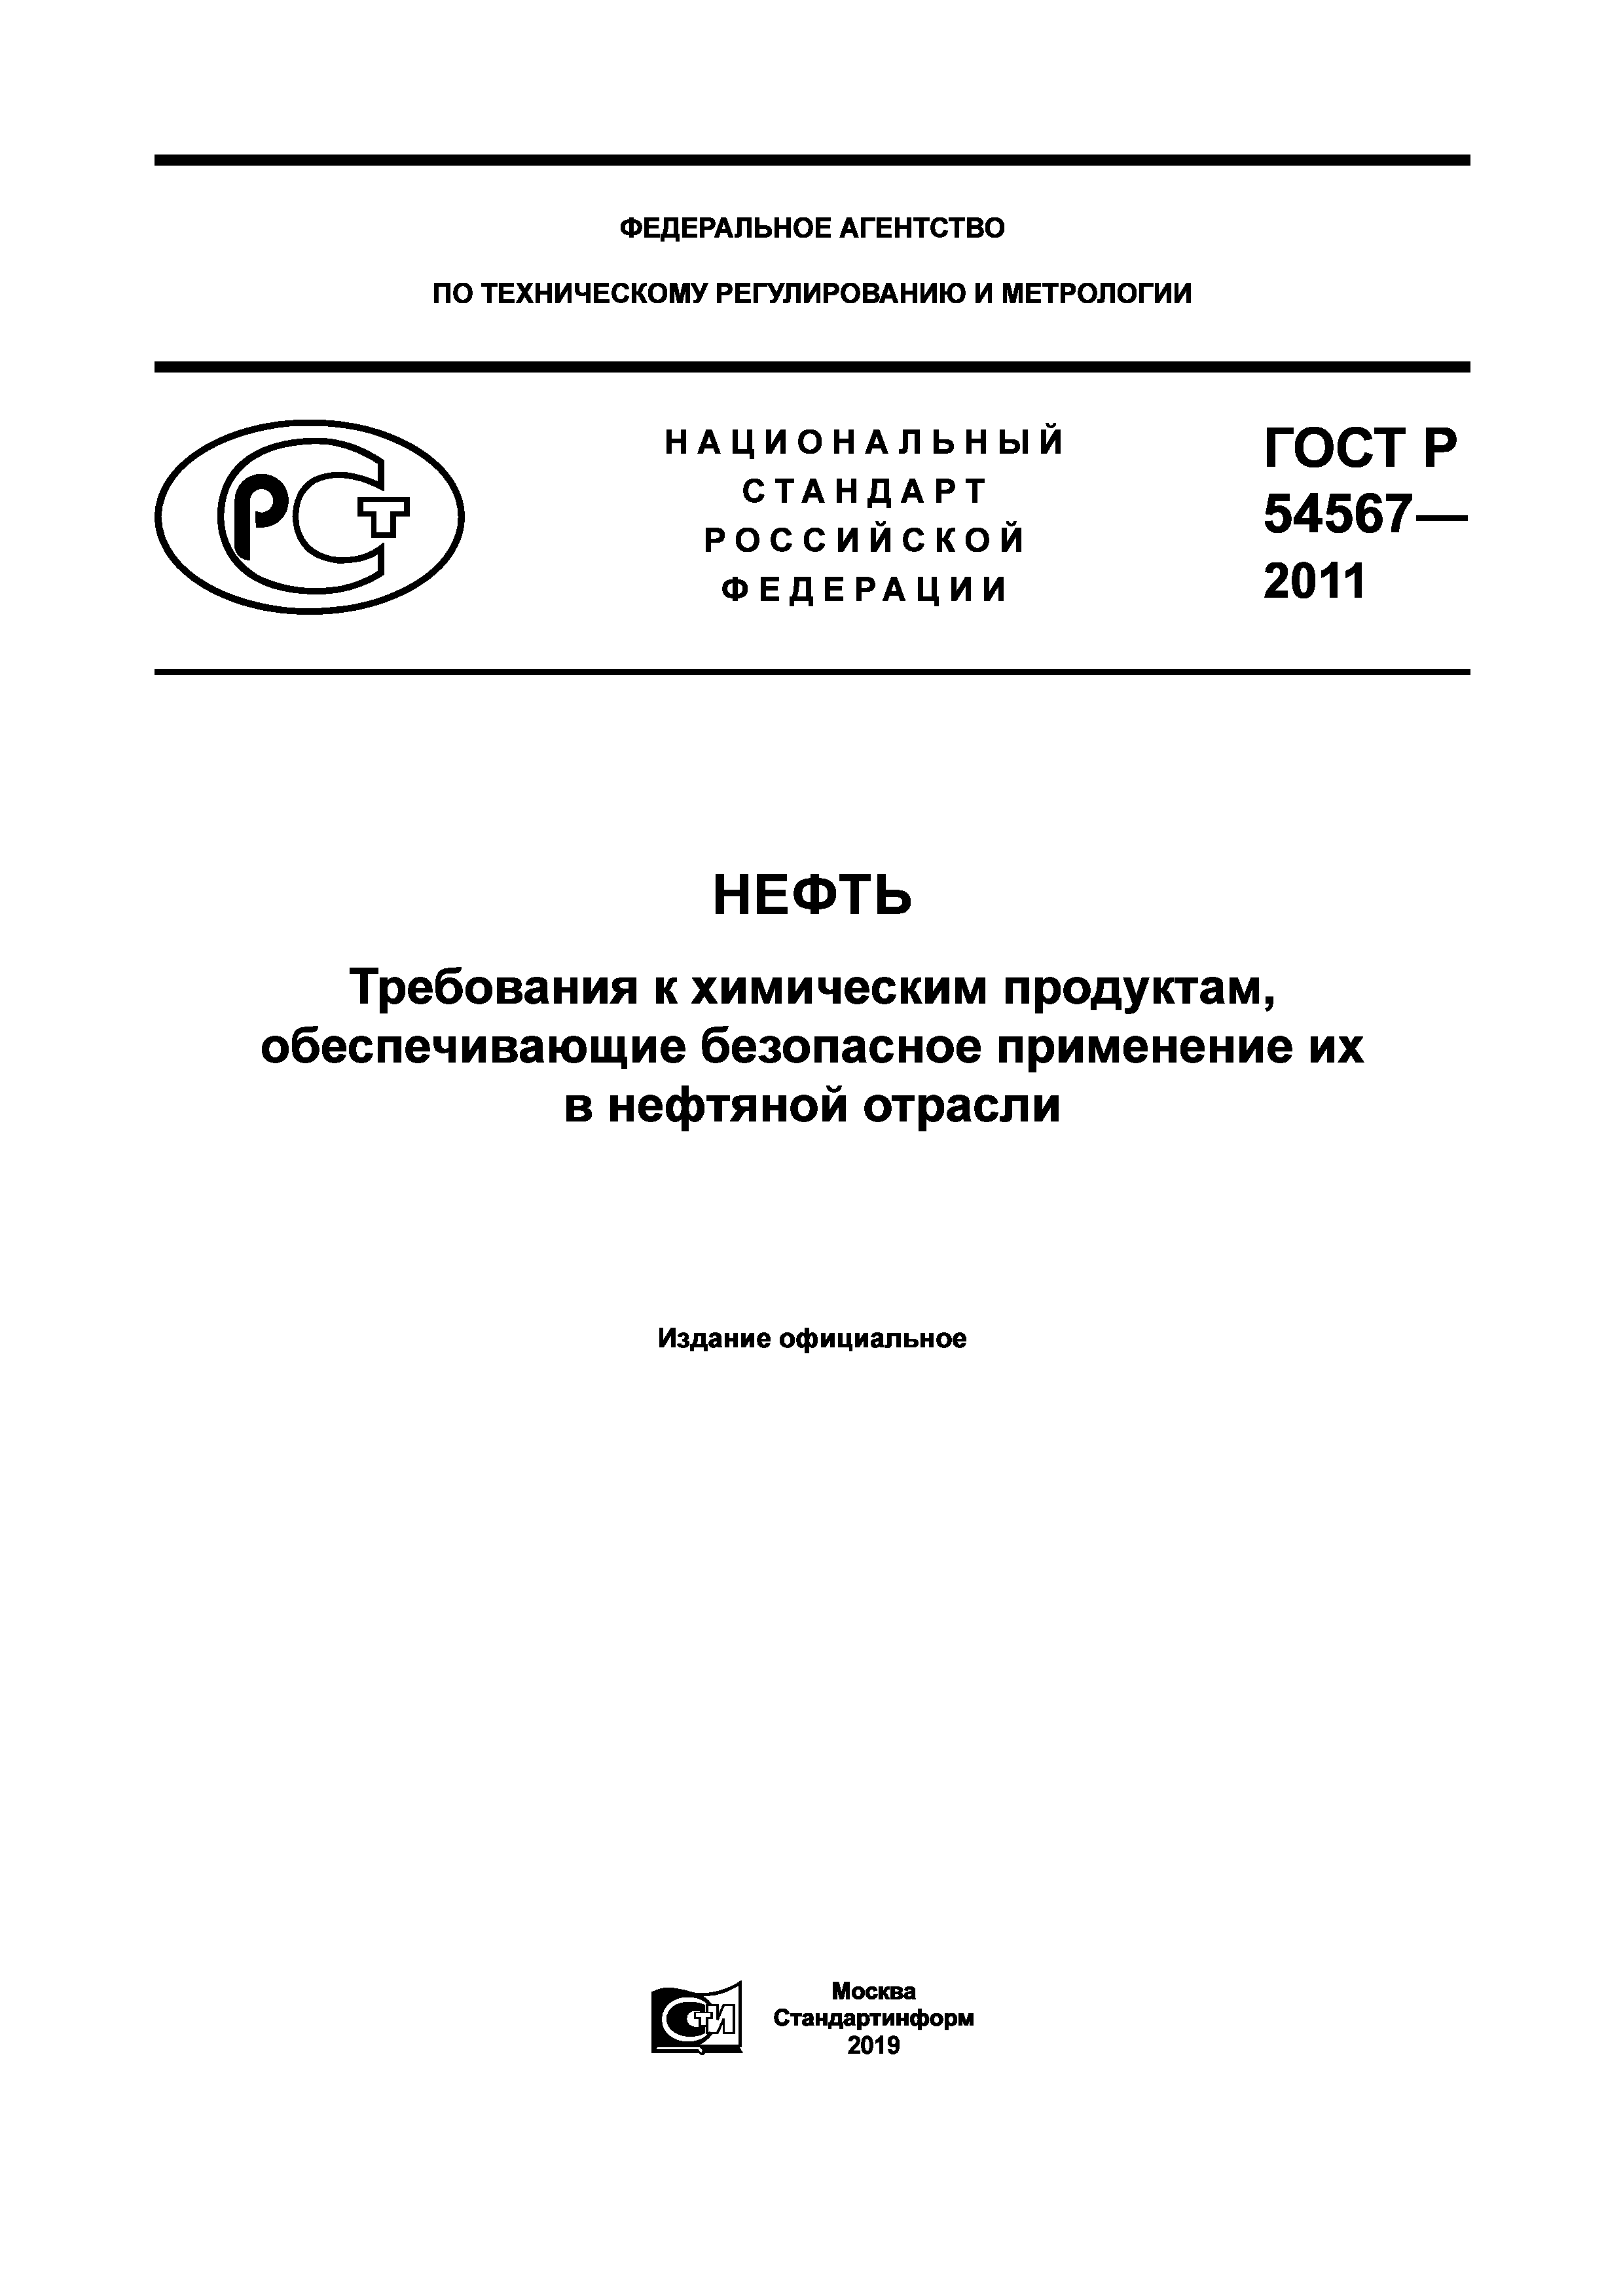 ГОСТ Р 54567-2011